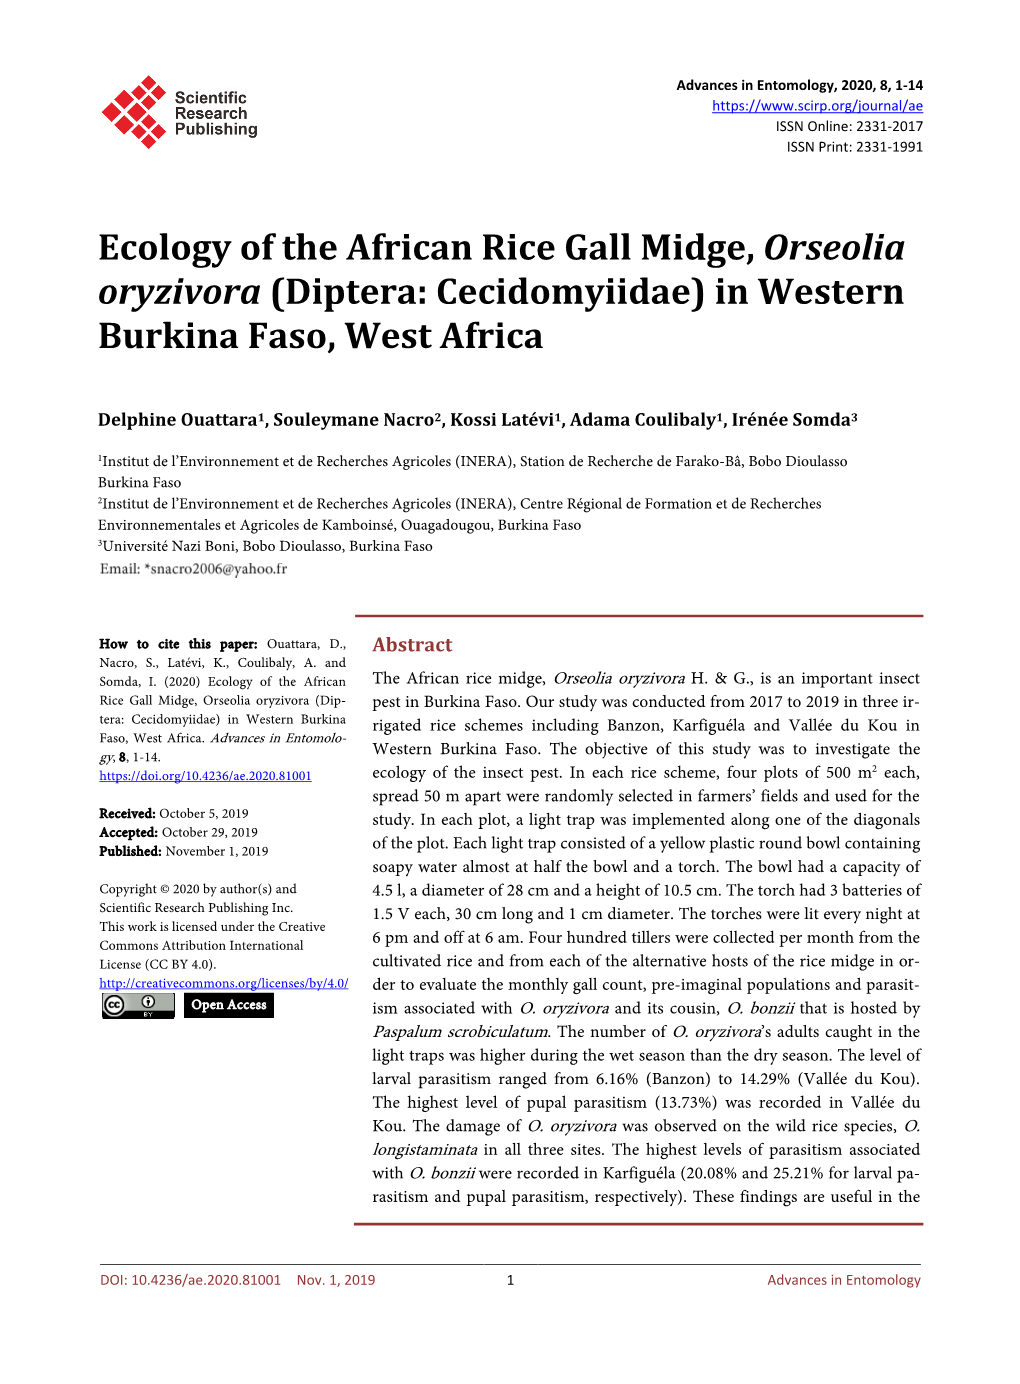 Ecology of the African Rice Gall Midge, Orseolia Oryzivora (Diptera: Cecidomyiidae) in Western Burkina Faso, West Africa